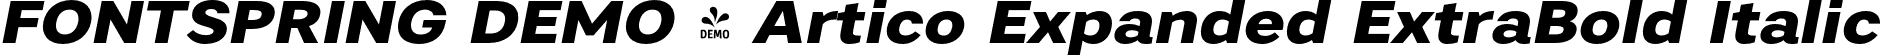 FONTSPRING DEMO - Artico Expanded ExtraBold Italic font | Fontspring-DEMO-articoexpanded-exboldit.otf